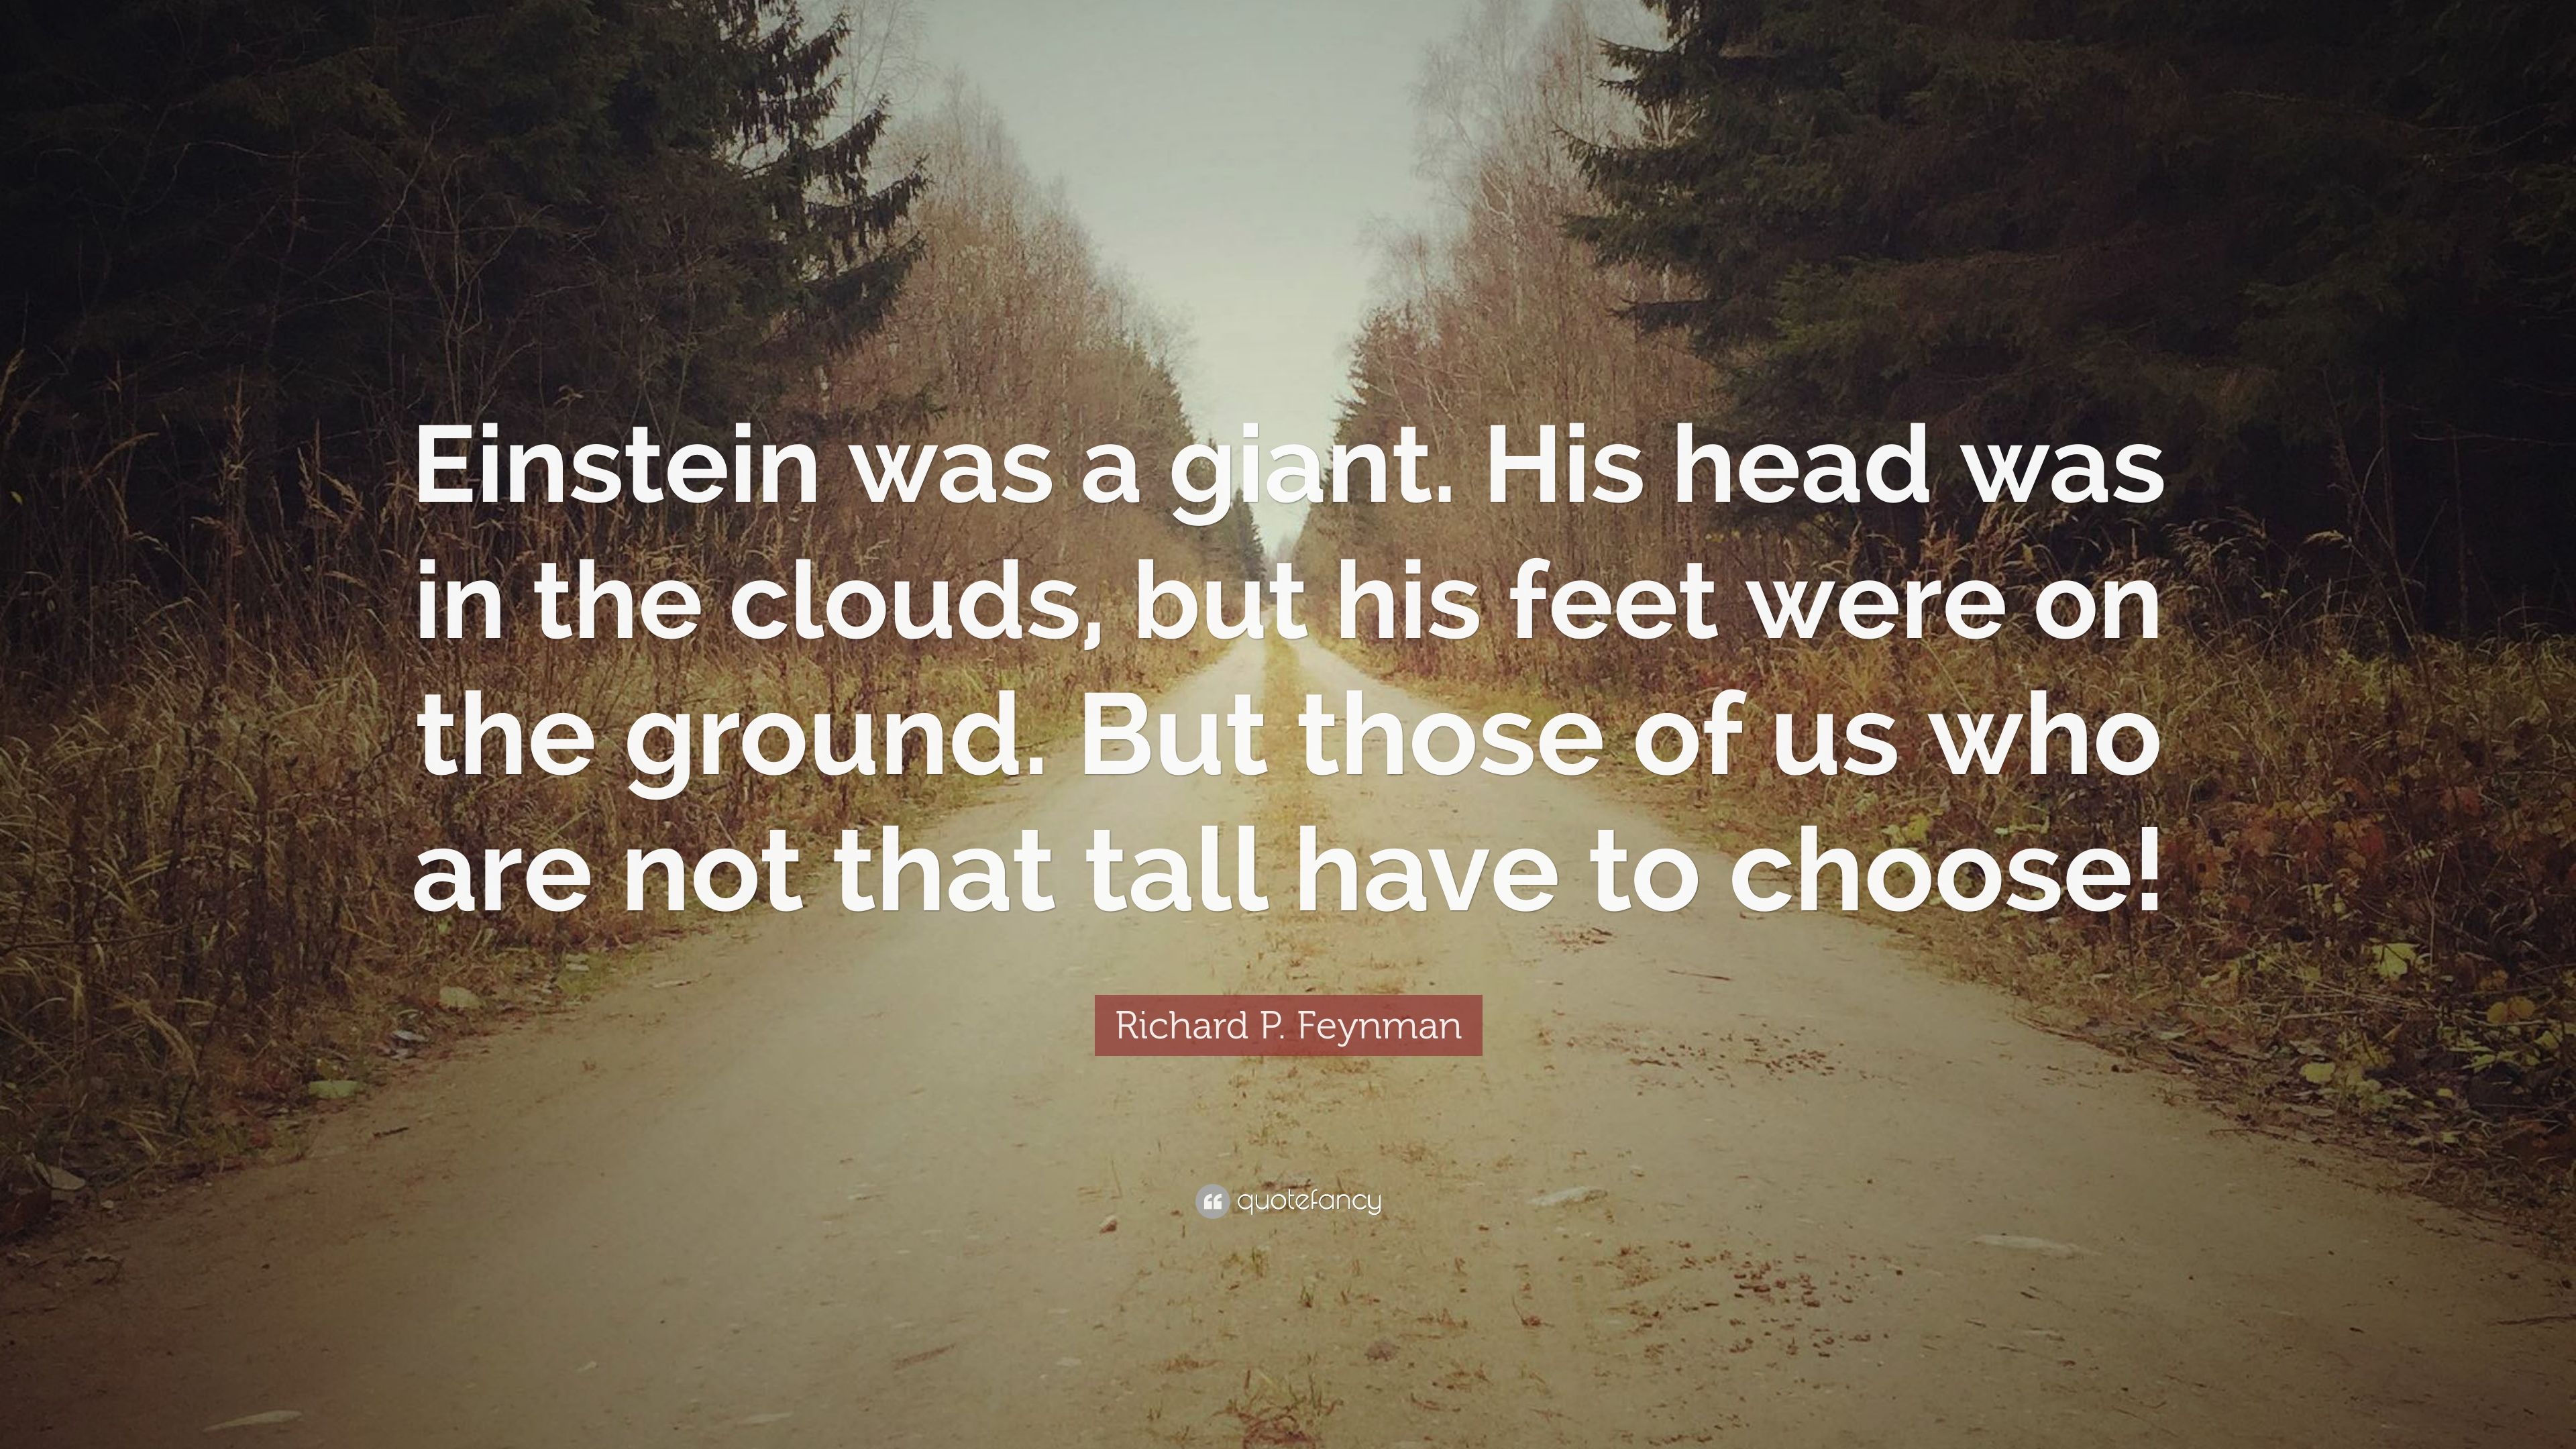 Richard P. Feynman Quote: “Einstein was a giant. His head was